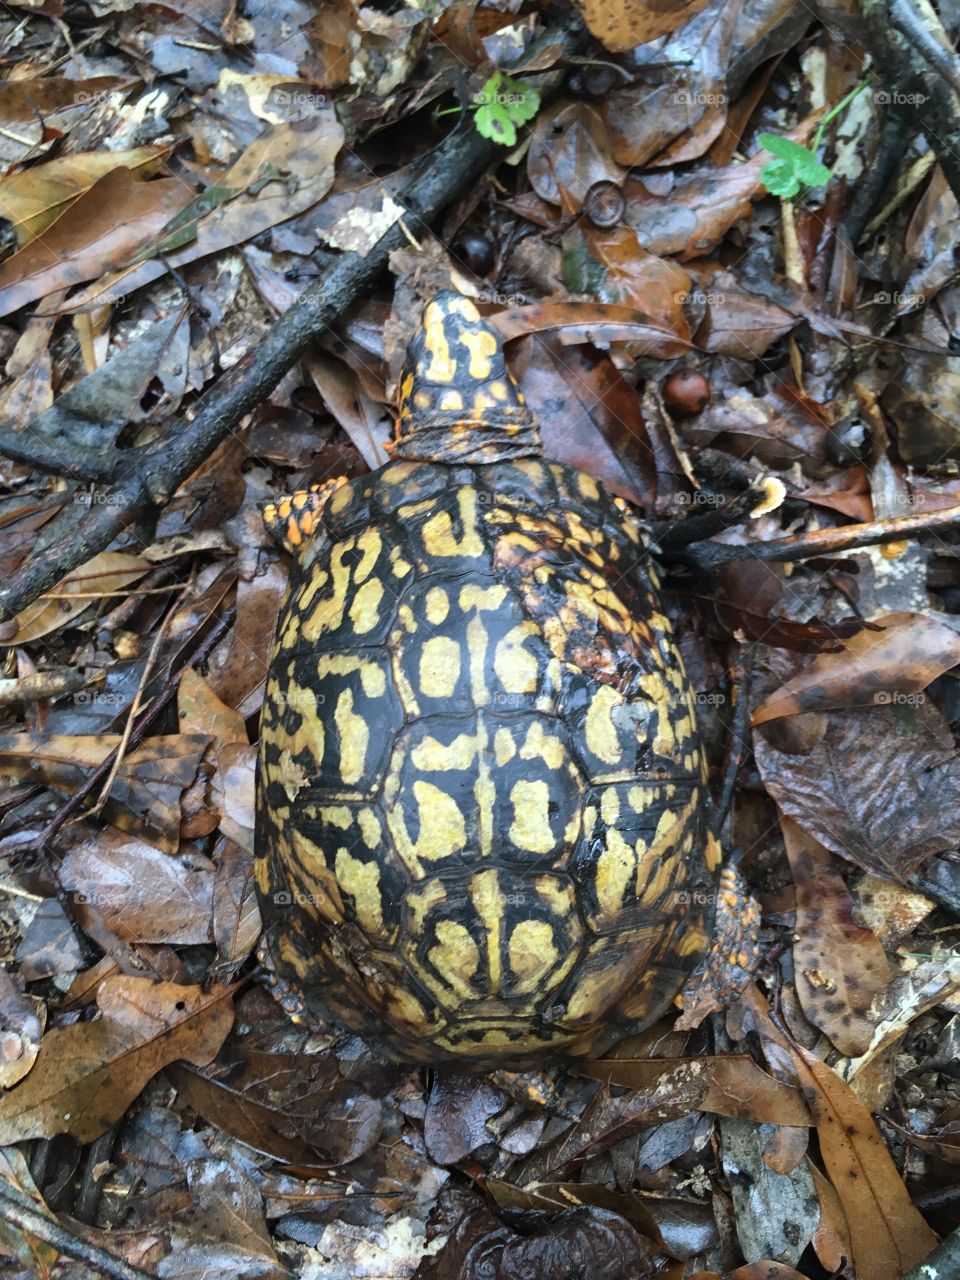 Carolina box turtle 